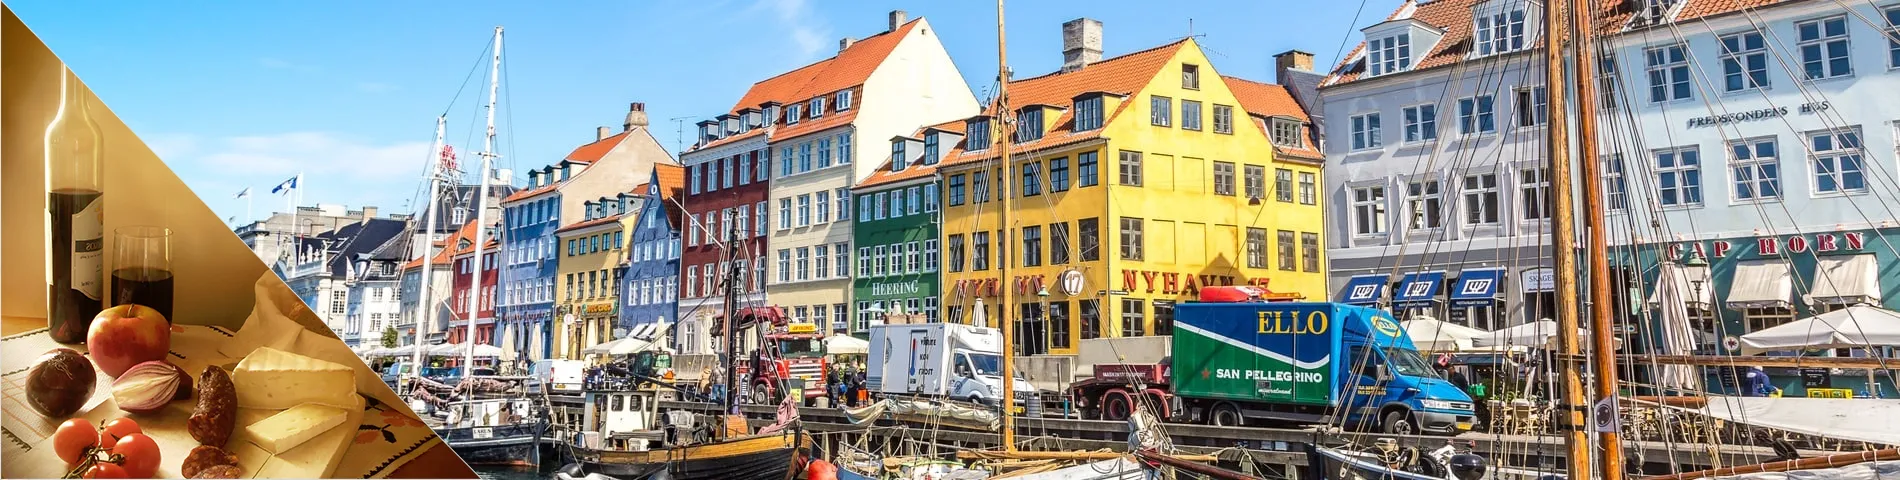 Copenhague - Danois & Culture